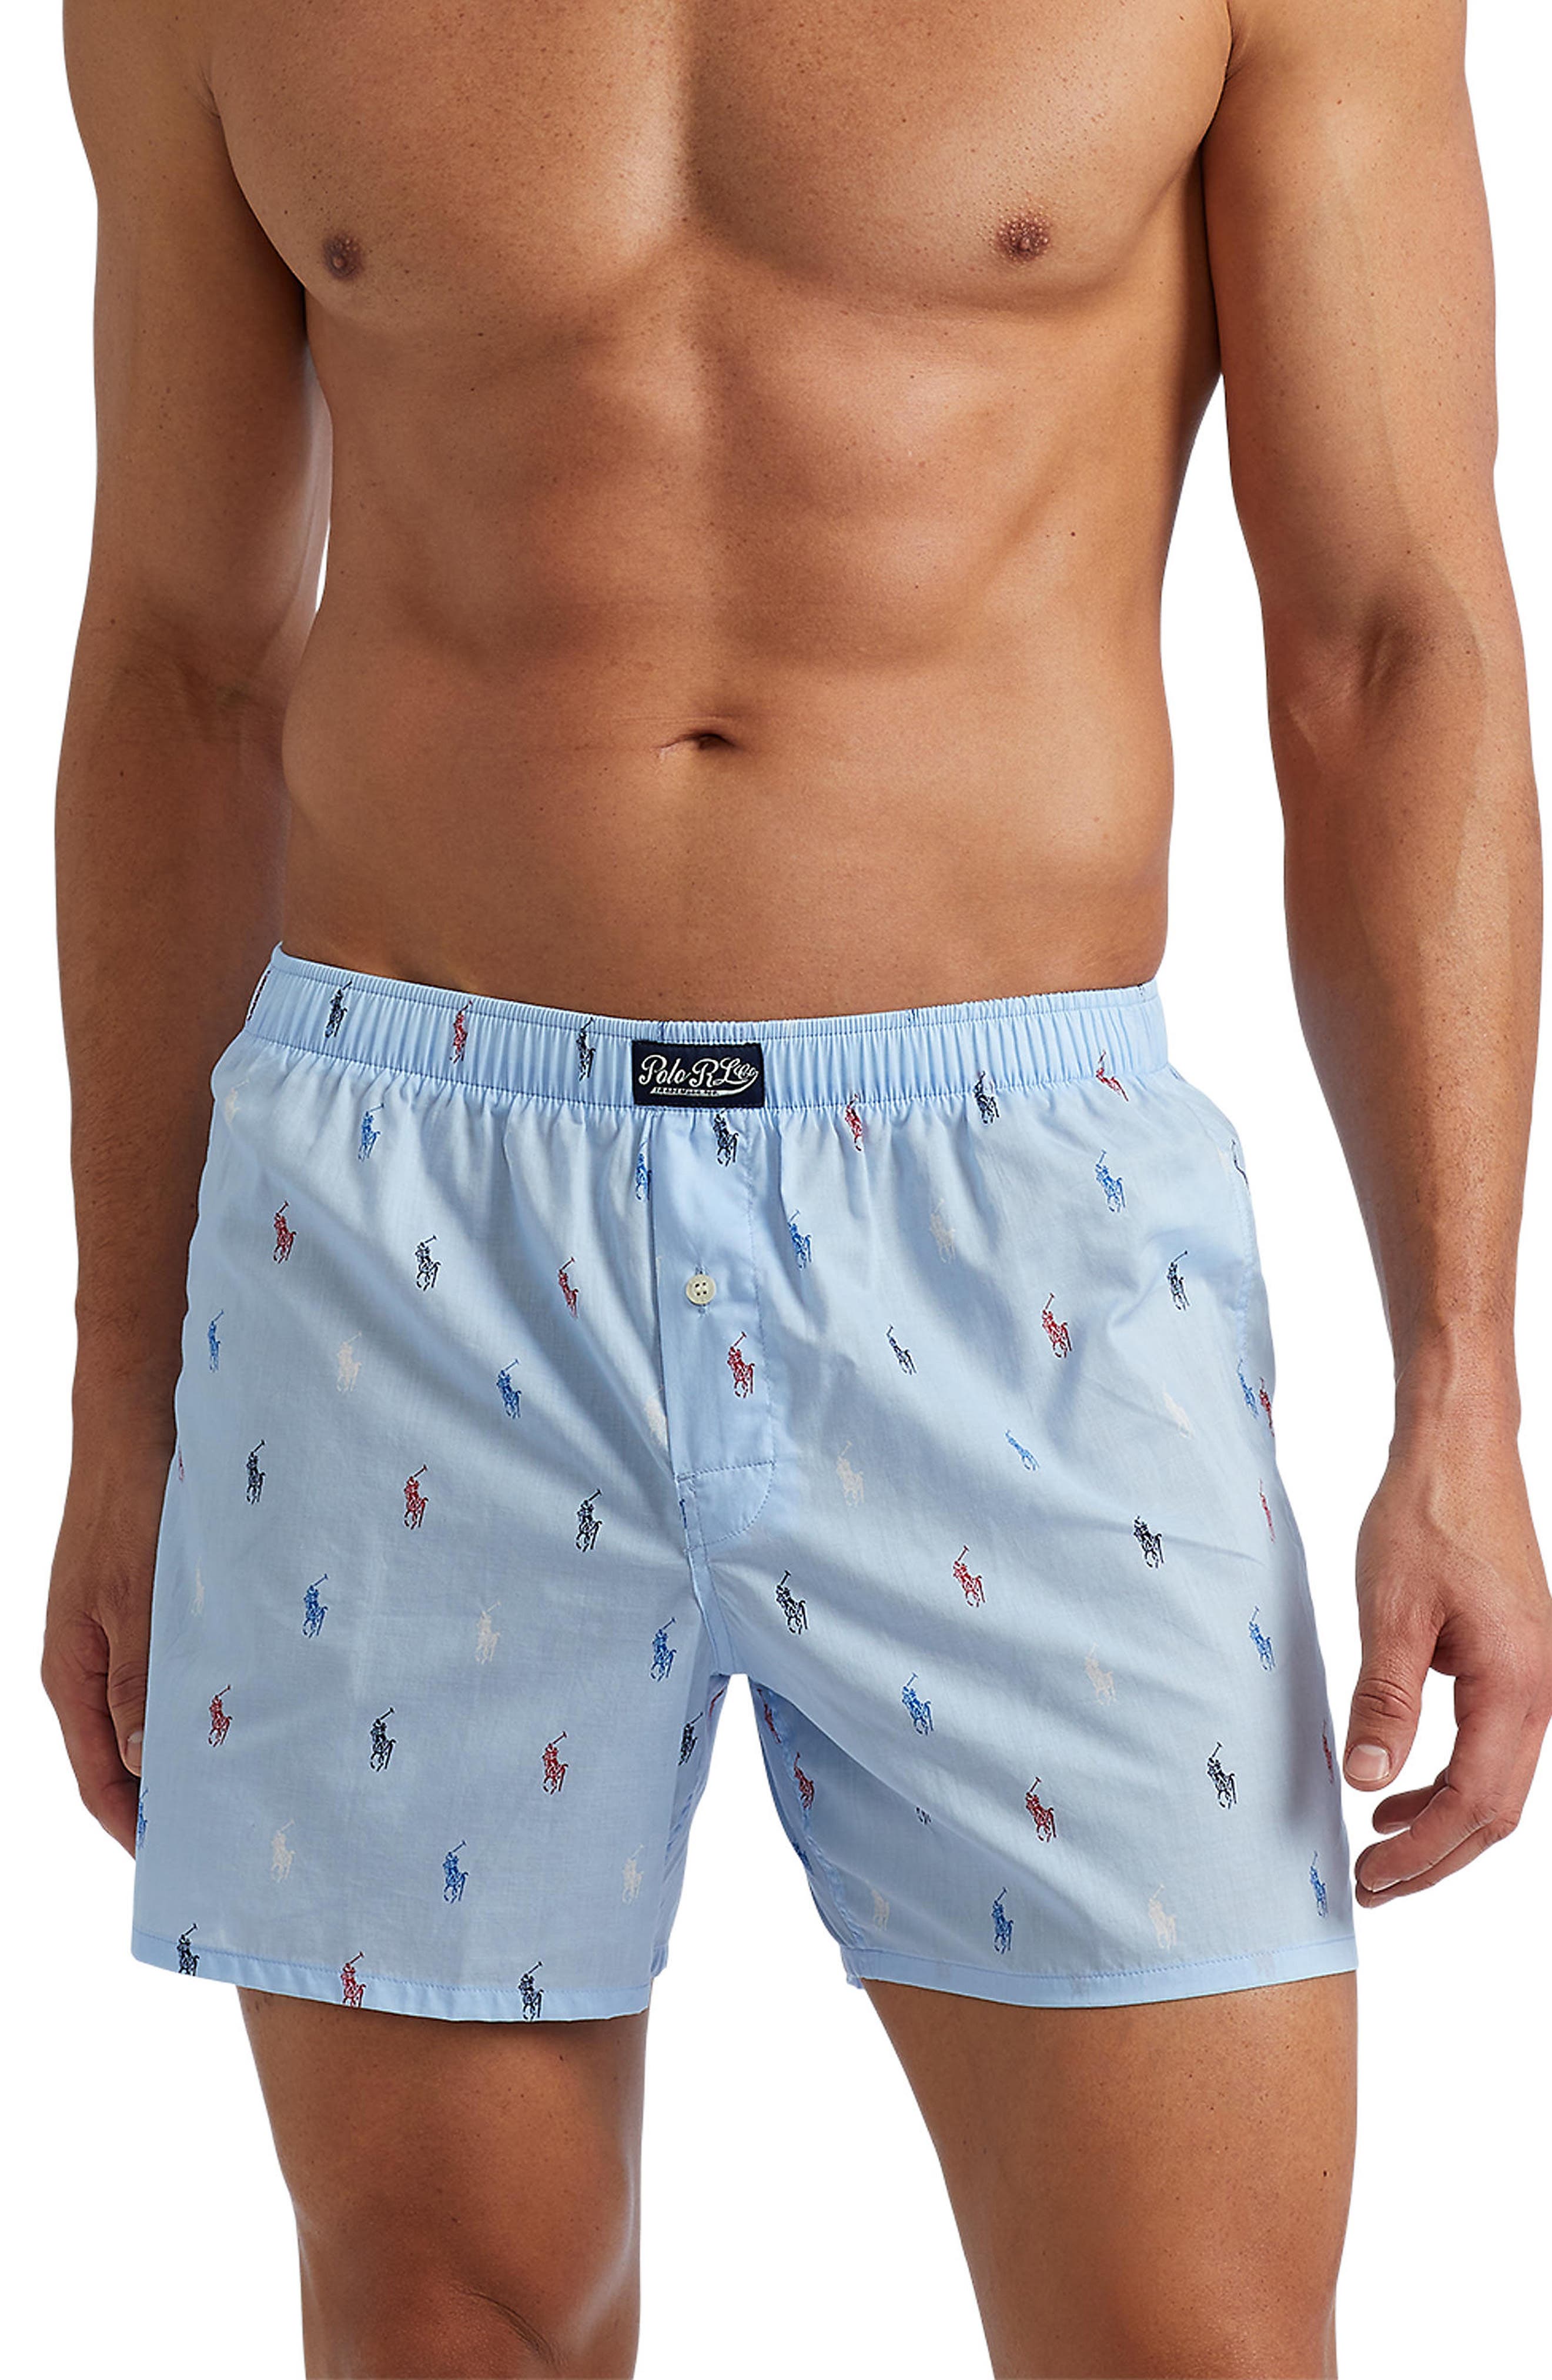 Mens Boxer Briefs Underwear Two Acorns Printed Underpants,M/L/XL/XXL/3X 